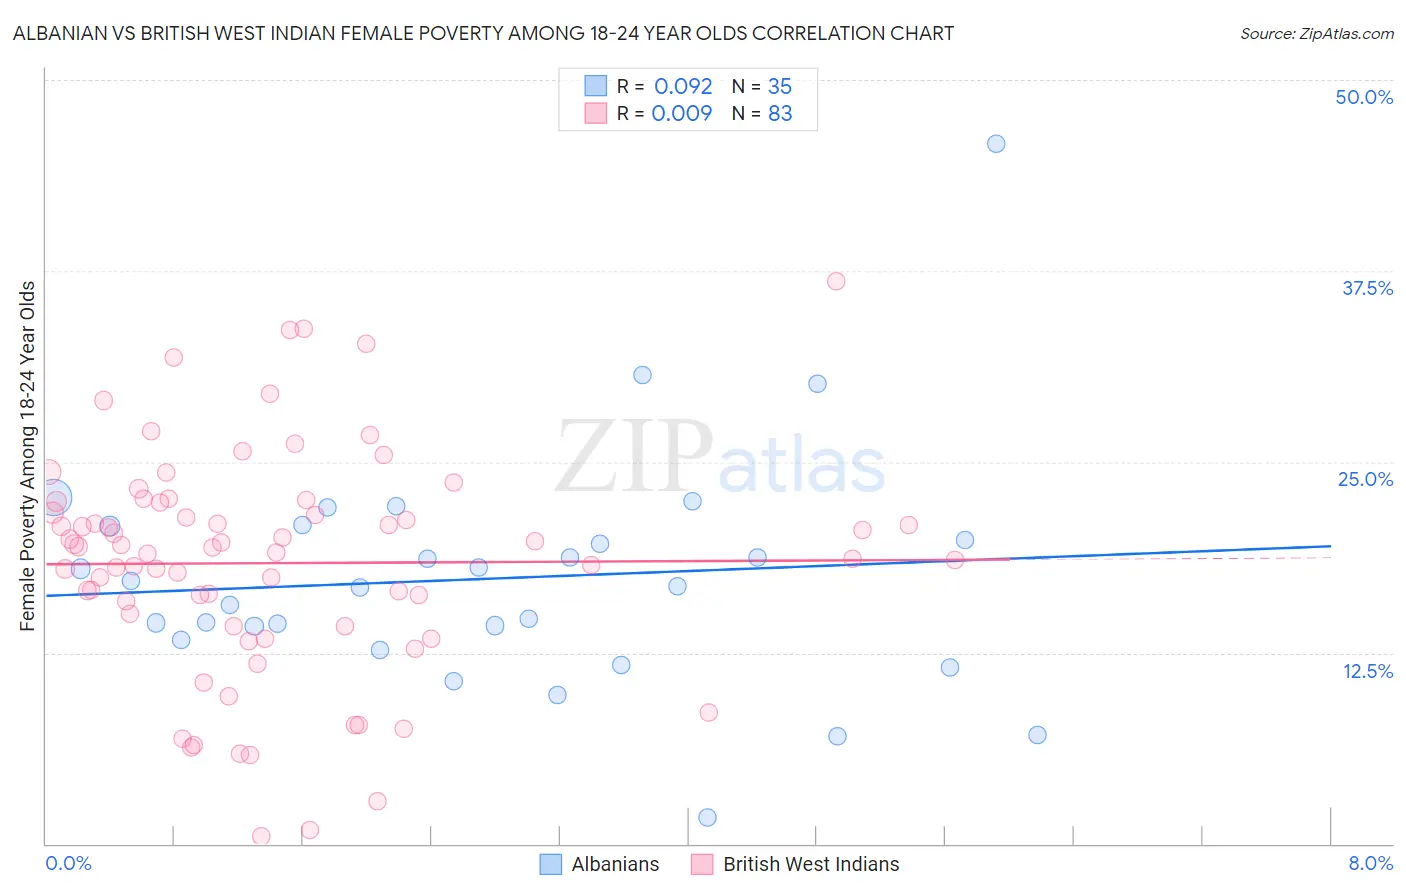 Albanian vs British West Indian Female Poverty Among 18-24 Year Olds